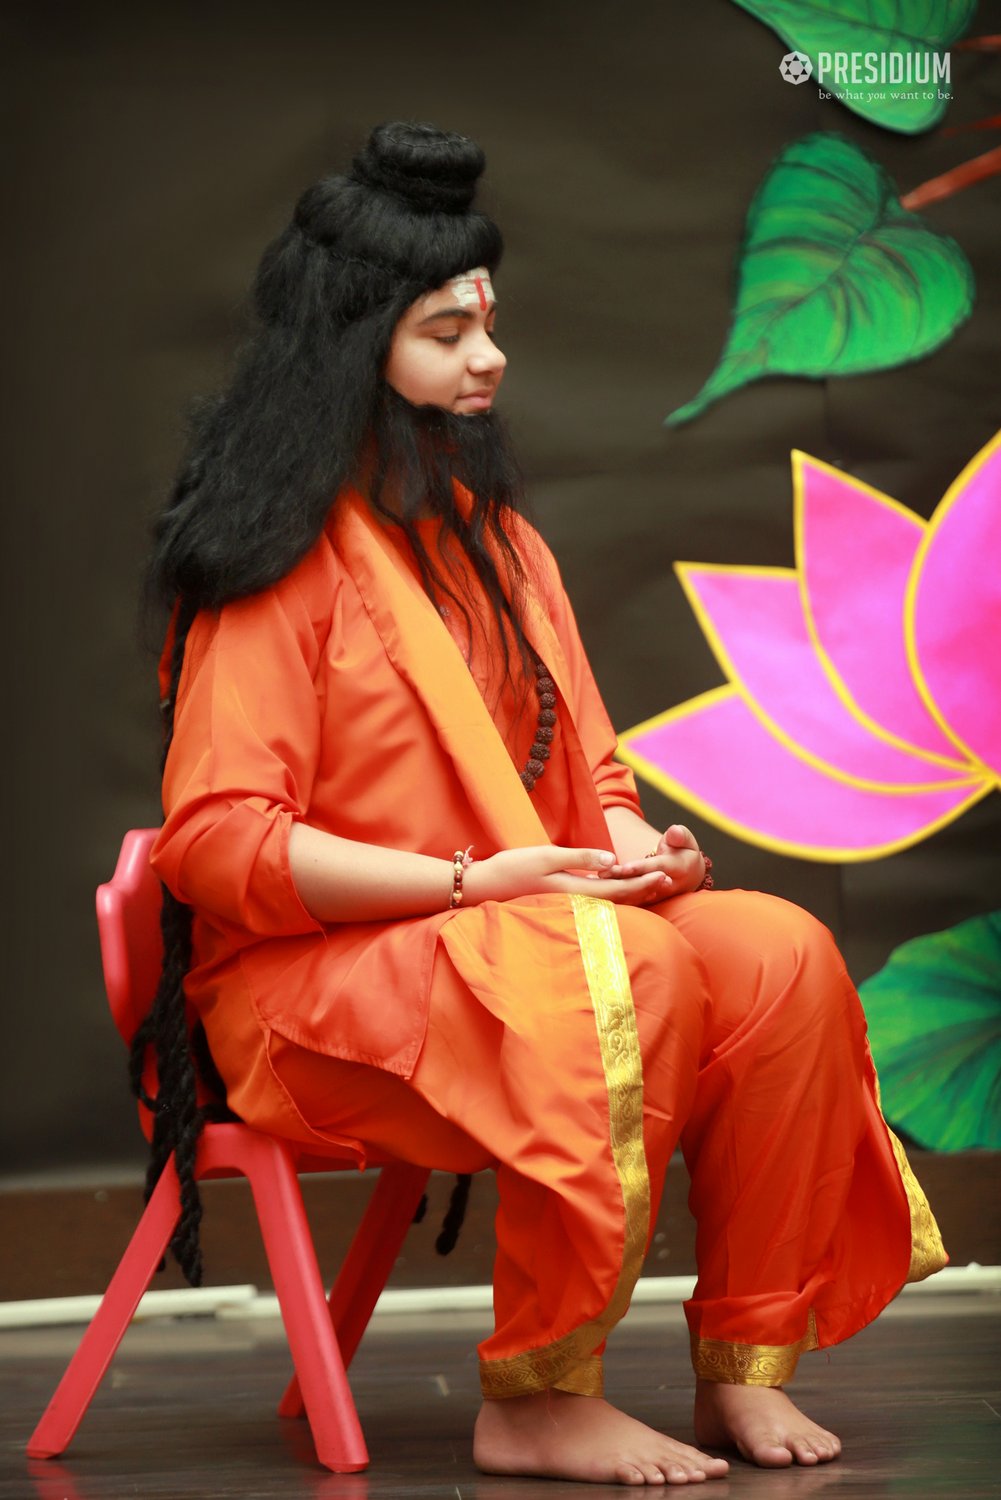 Presidium Rajnagar, YOUNG PRESIDIANS TAKE INSPIRATION FROM THE LIFE OF LORD BUDDHA